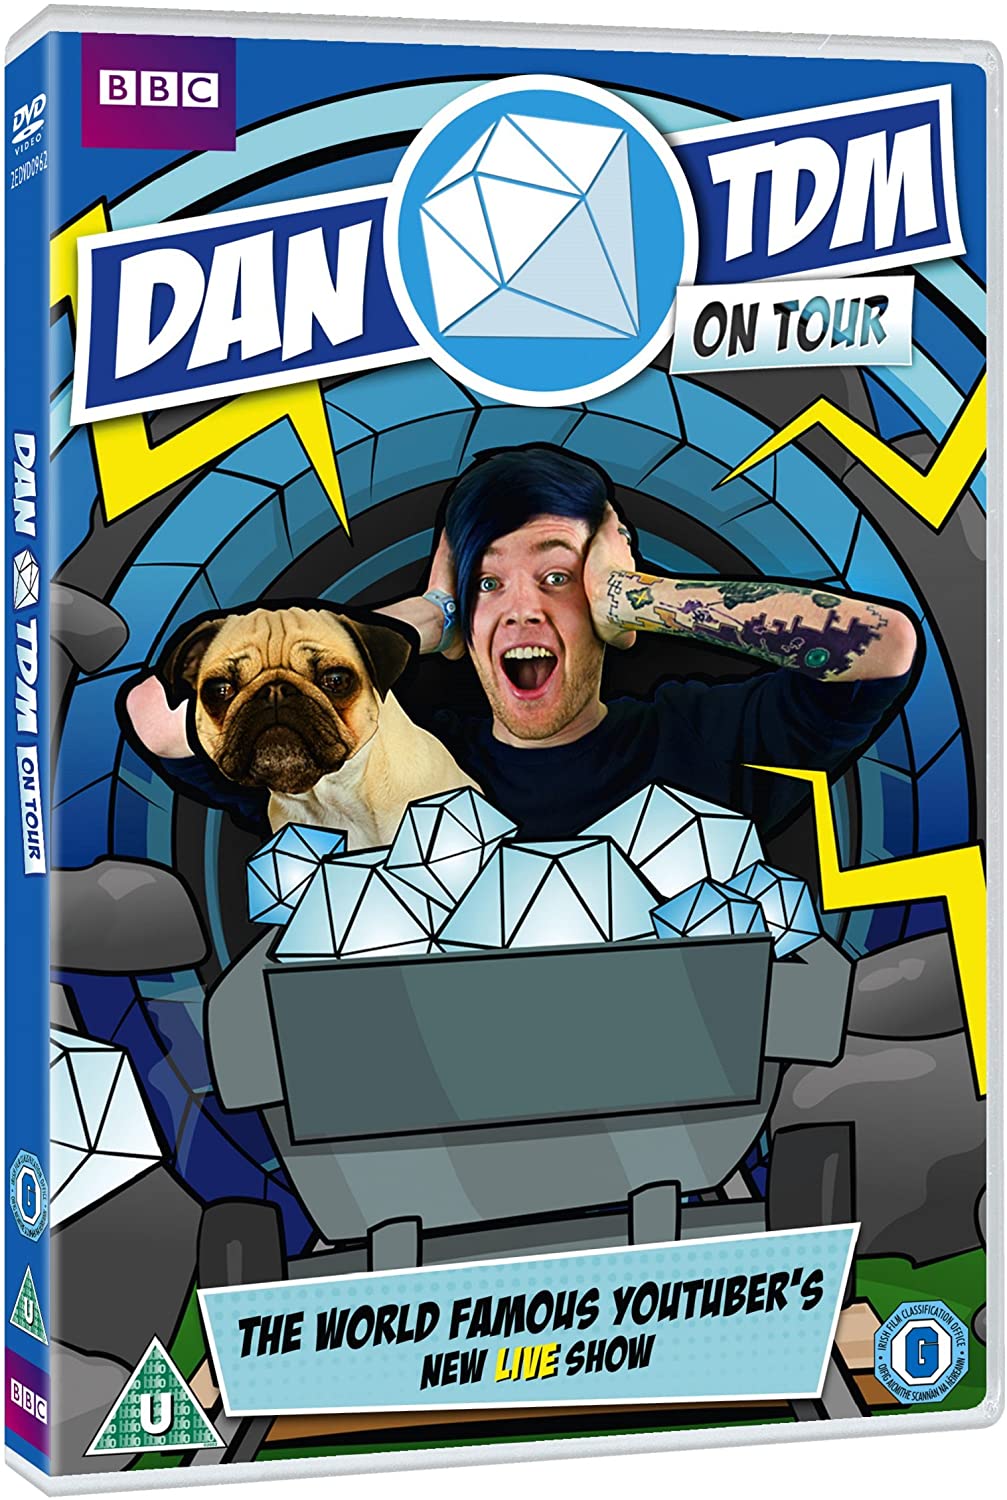 Dan TDM auf Tour [DVD] [2017]